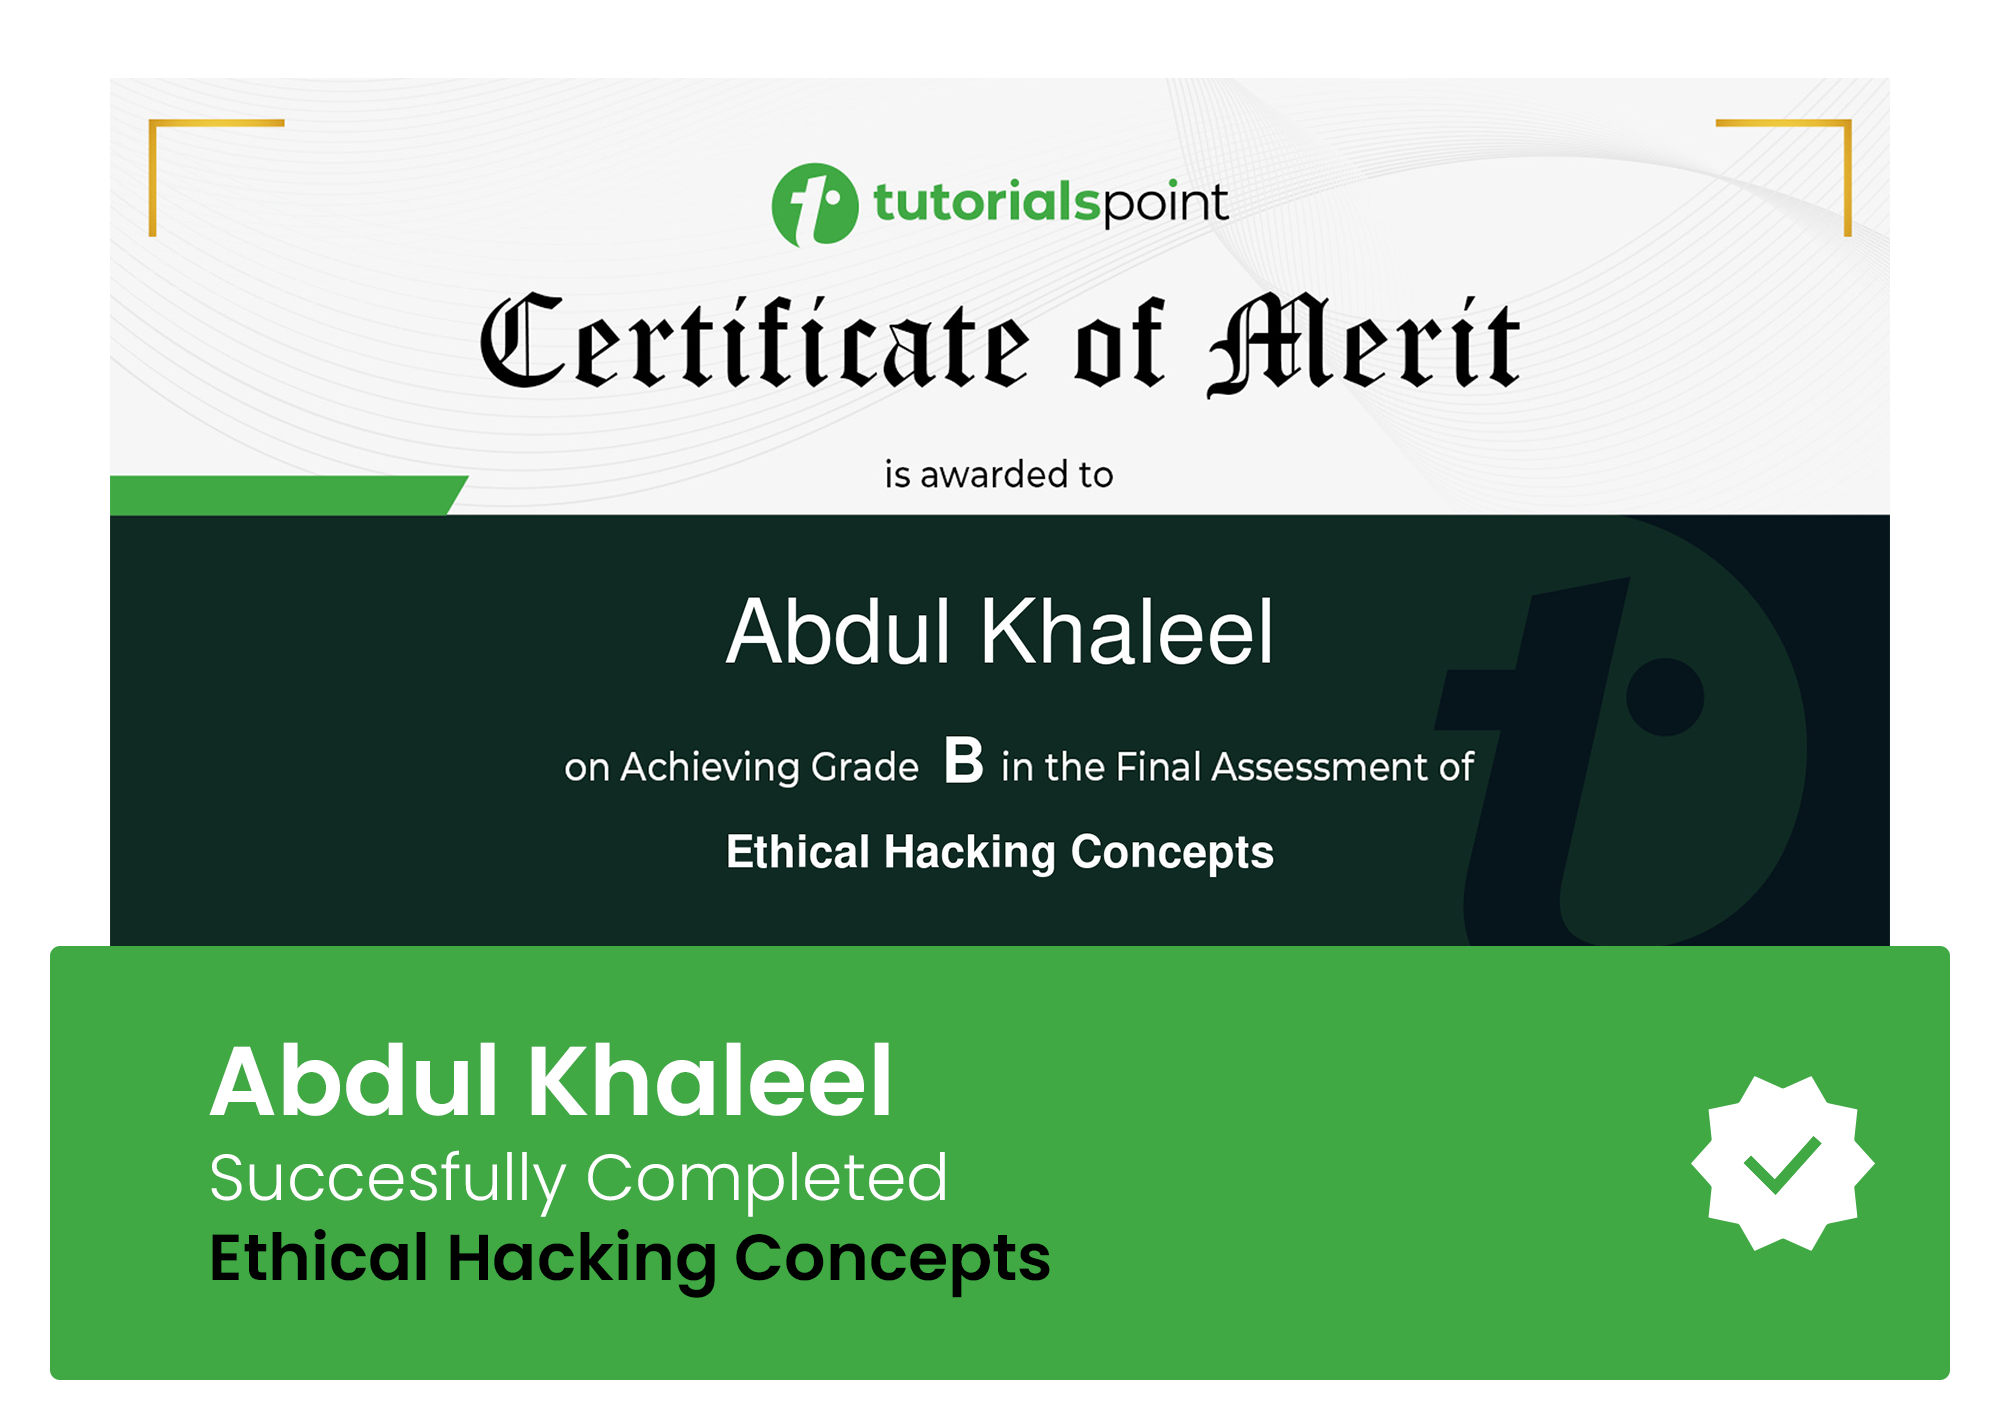 Sample Tutorialspoint certificate